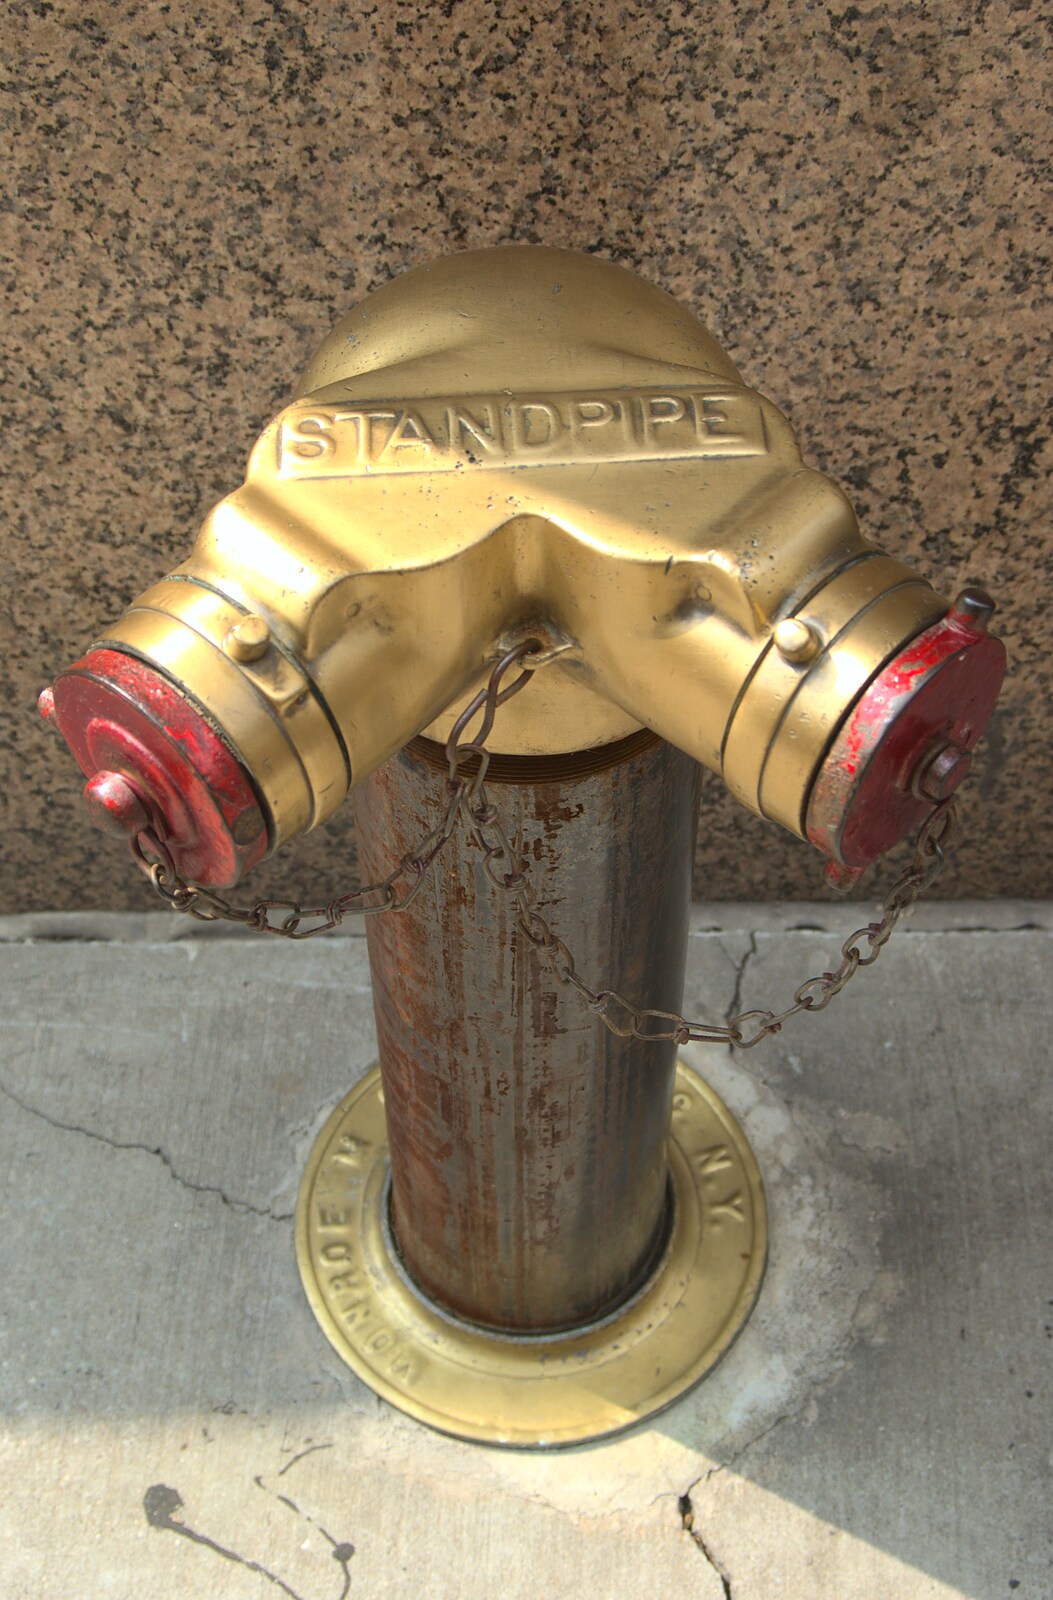 Shiny fire hydrant from A Manhattan Hotdog, New York, USA - 21st August 2011